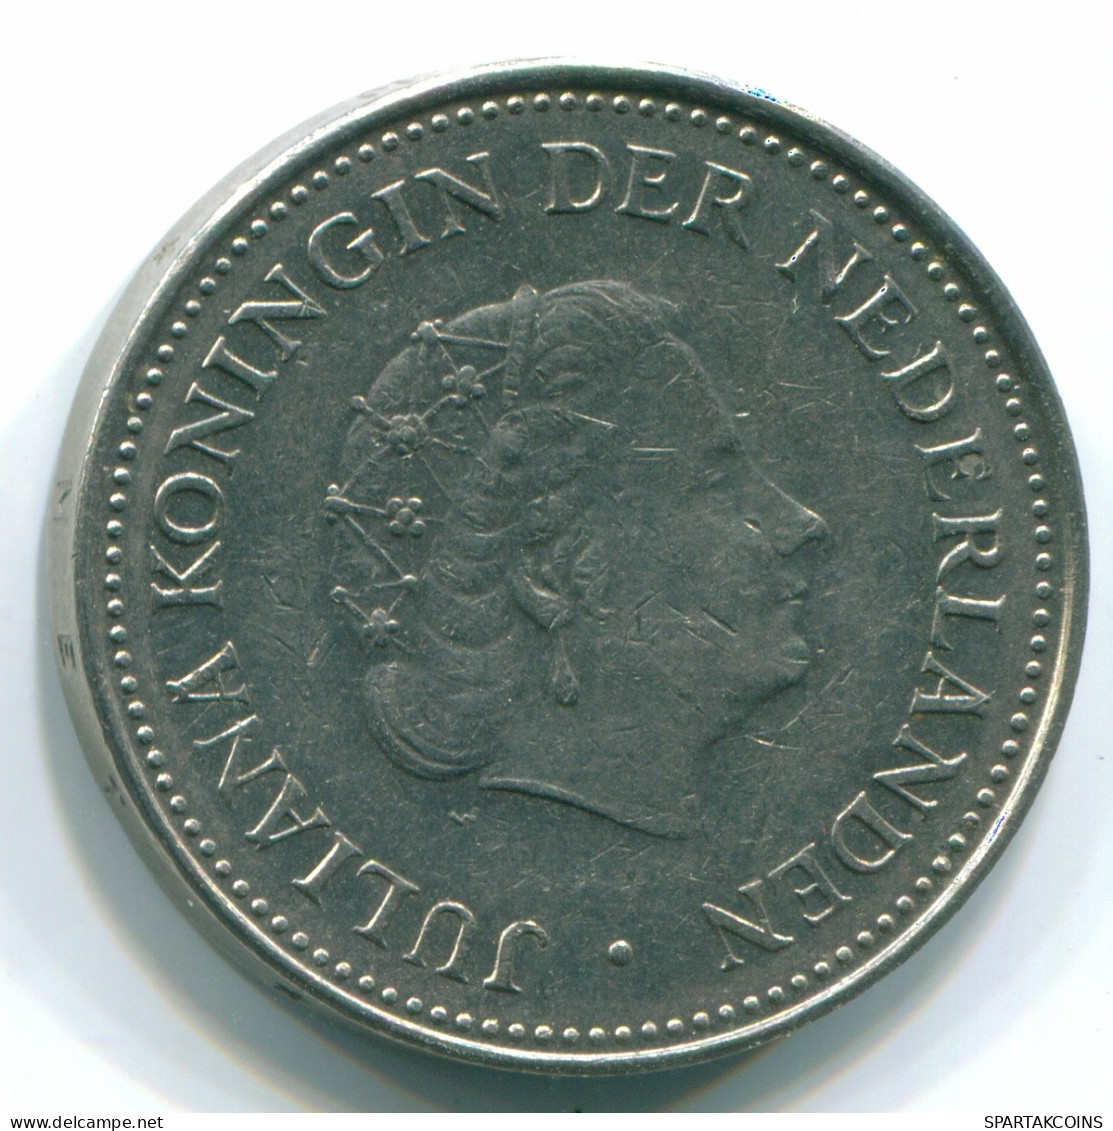 1 GULDEN 1971 NETHERLANDS ANTILLES Nickel Colonial Coin #S12012.U.A - Netherlands Antilles